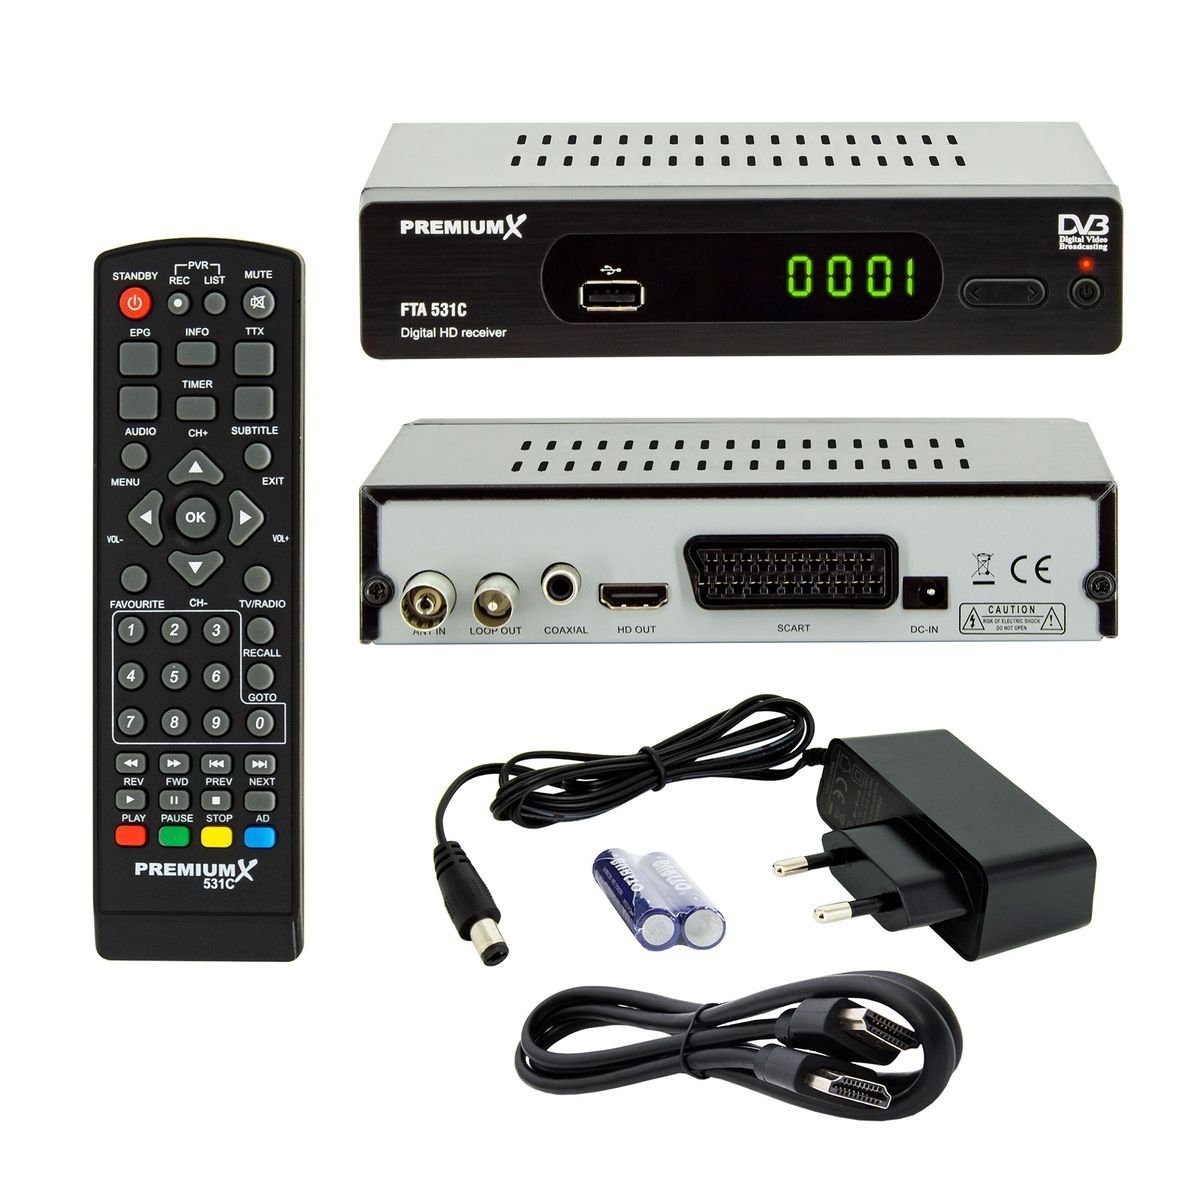 PremiumX FTA SCART Receiver HDMI FullHD TV Kabel USB Digital DVB-C 531C Kabel-Receiver